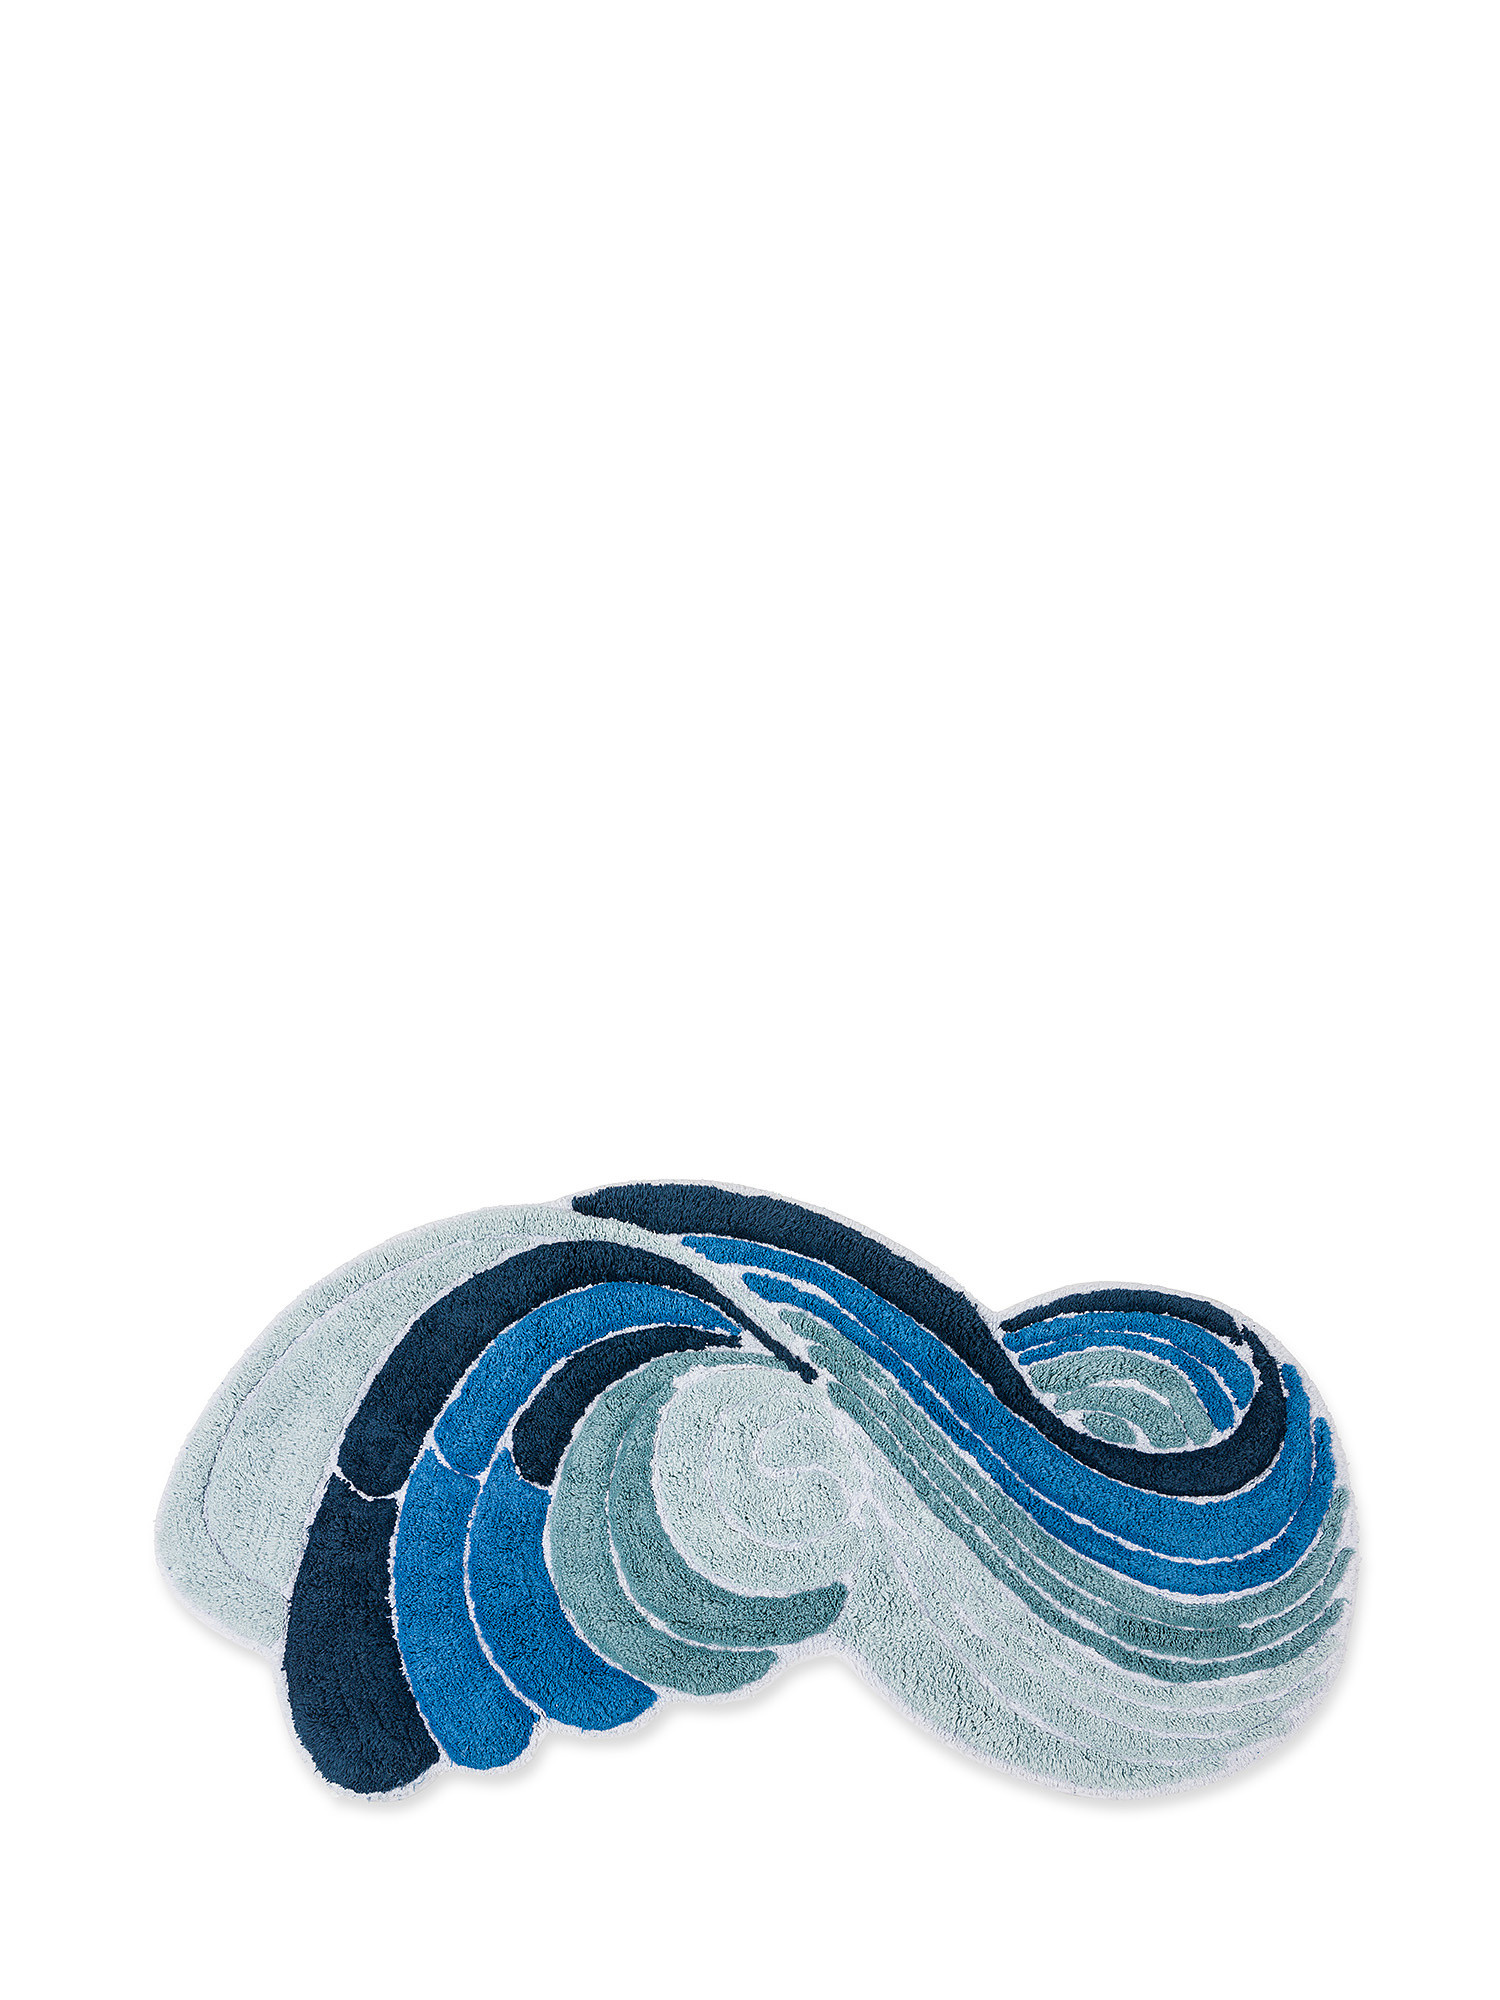 Tappeto bagno a forma di onda, Blu, large image number 0